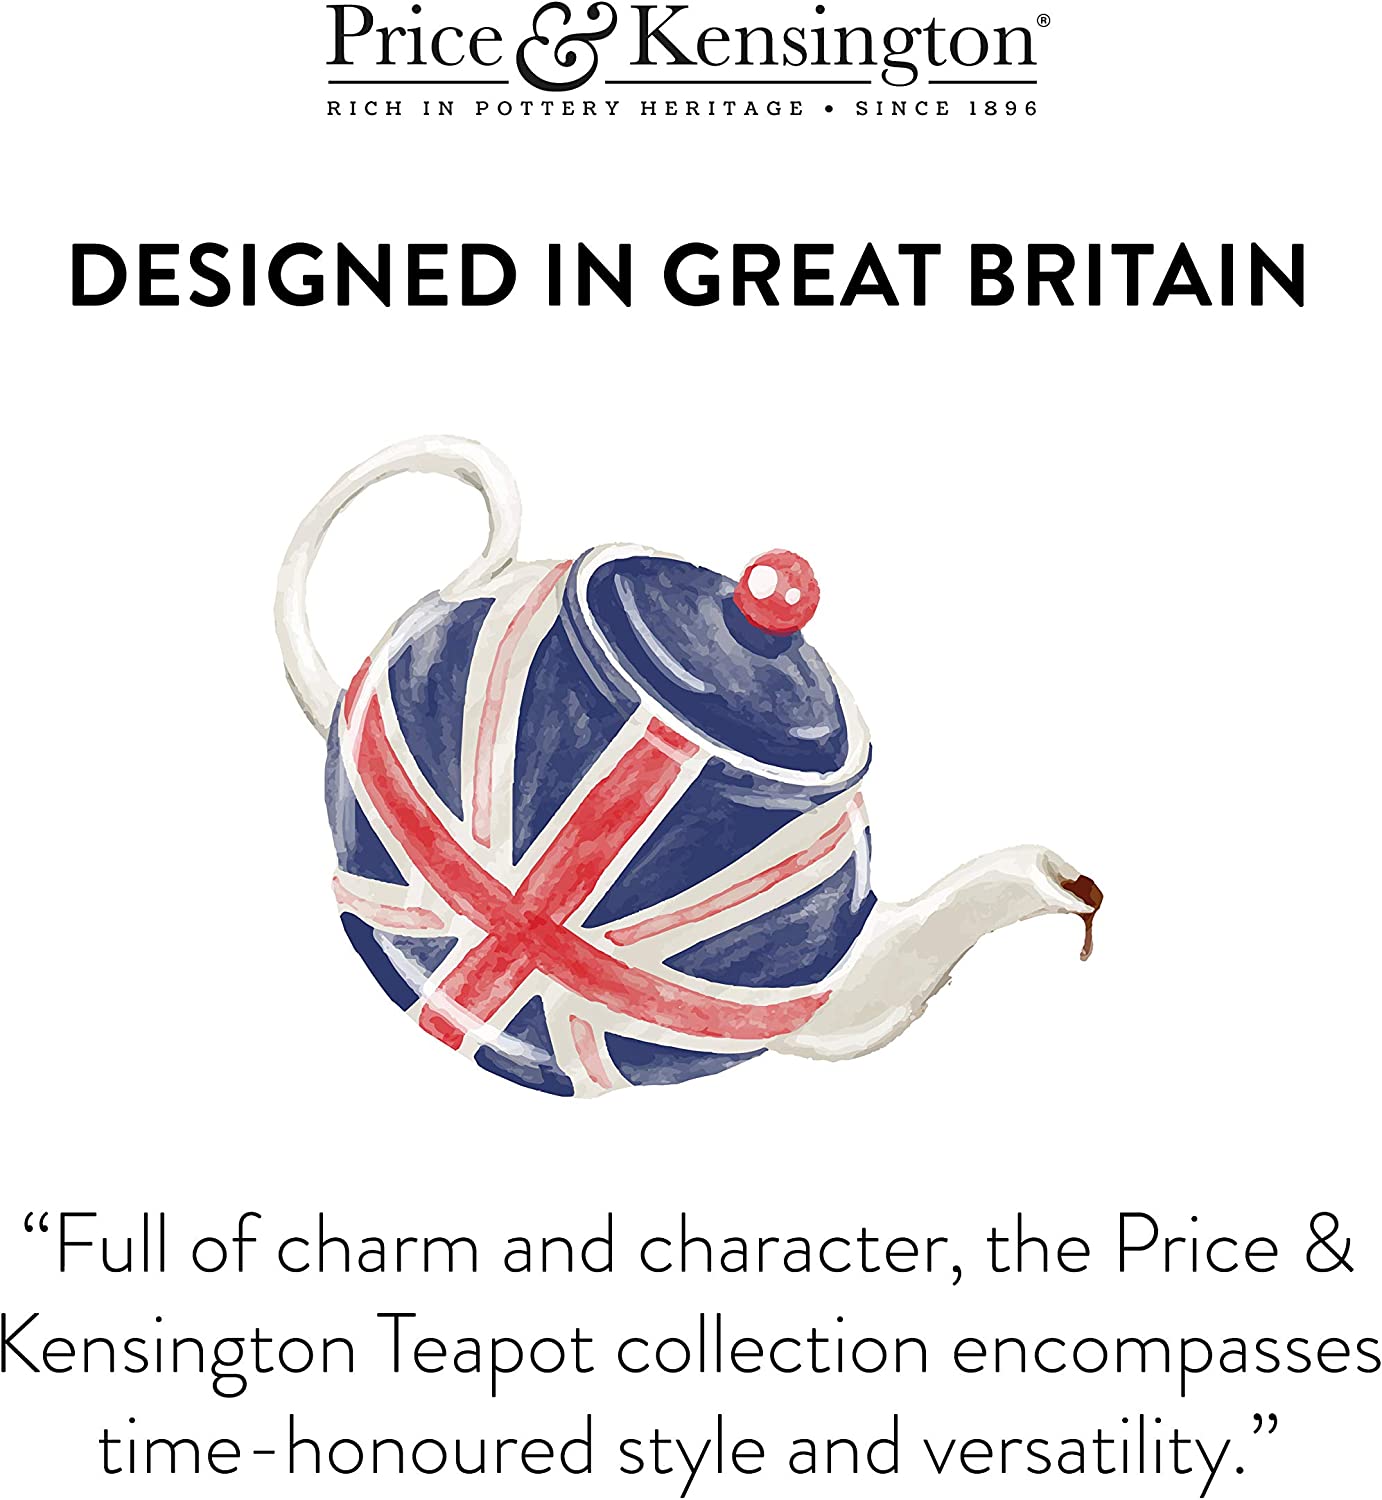 Price & Kensington Black Gloss 6 Cup / 39oz Large Teapot